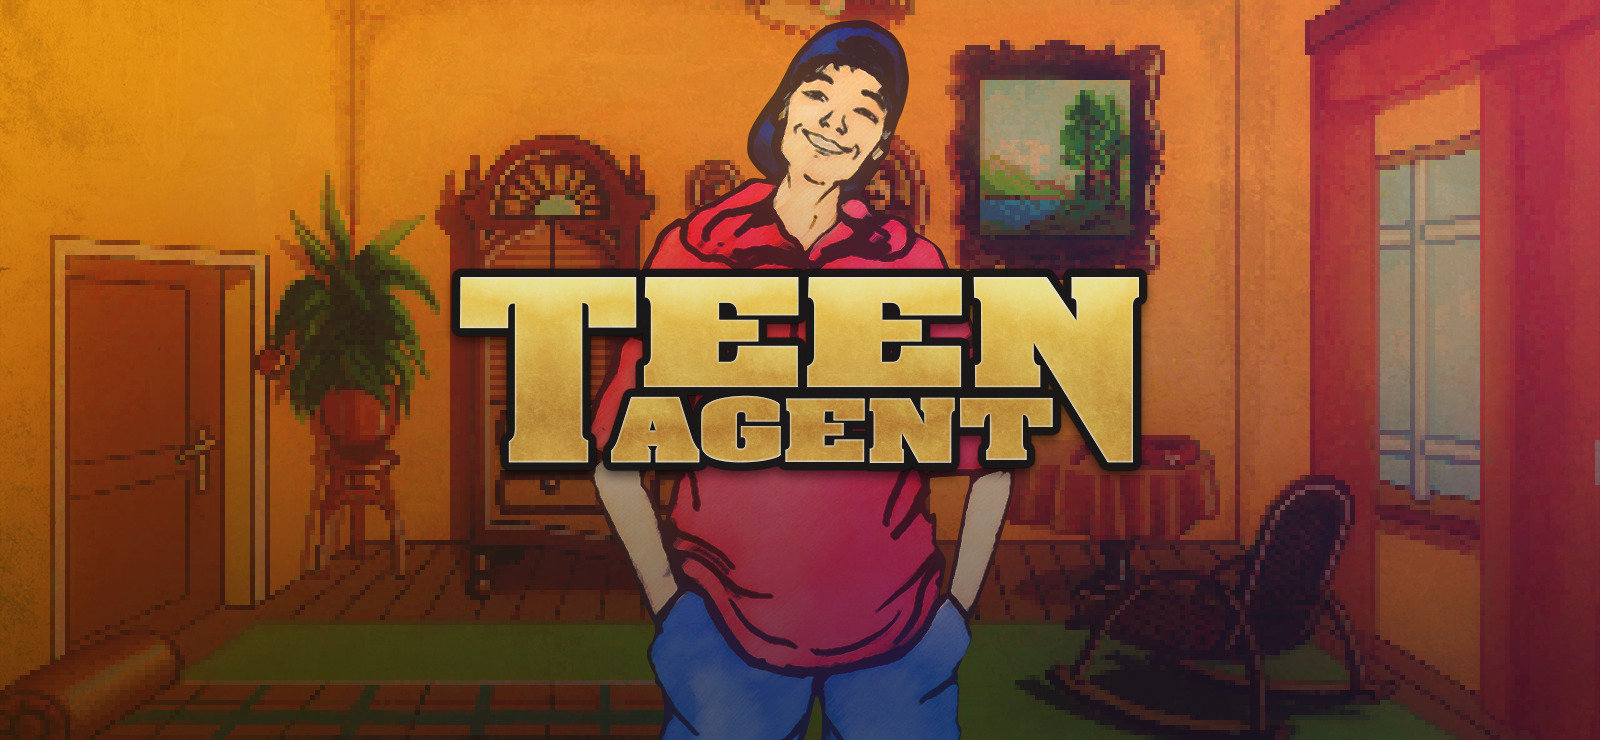 Teenagent